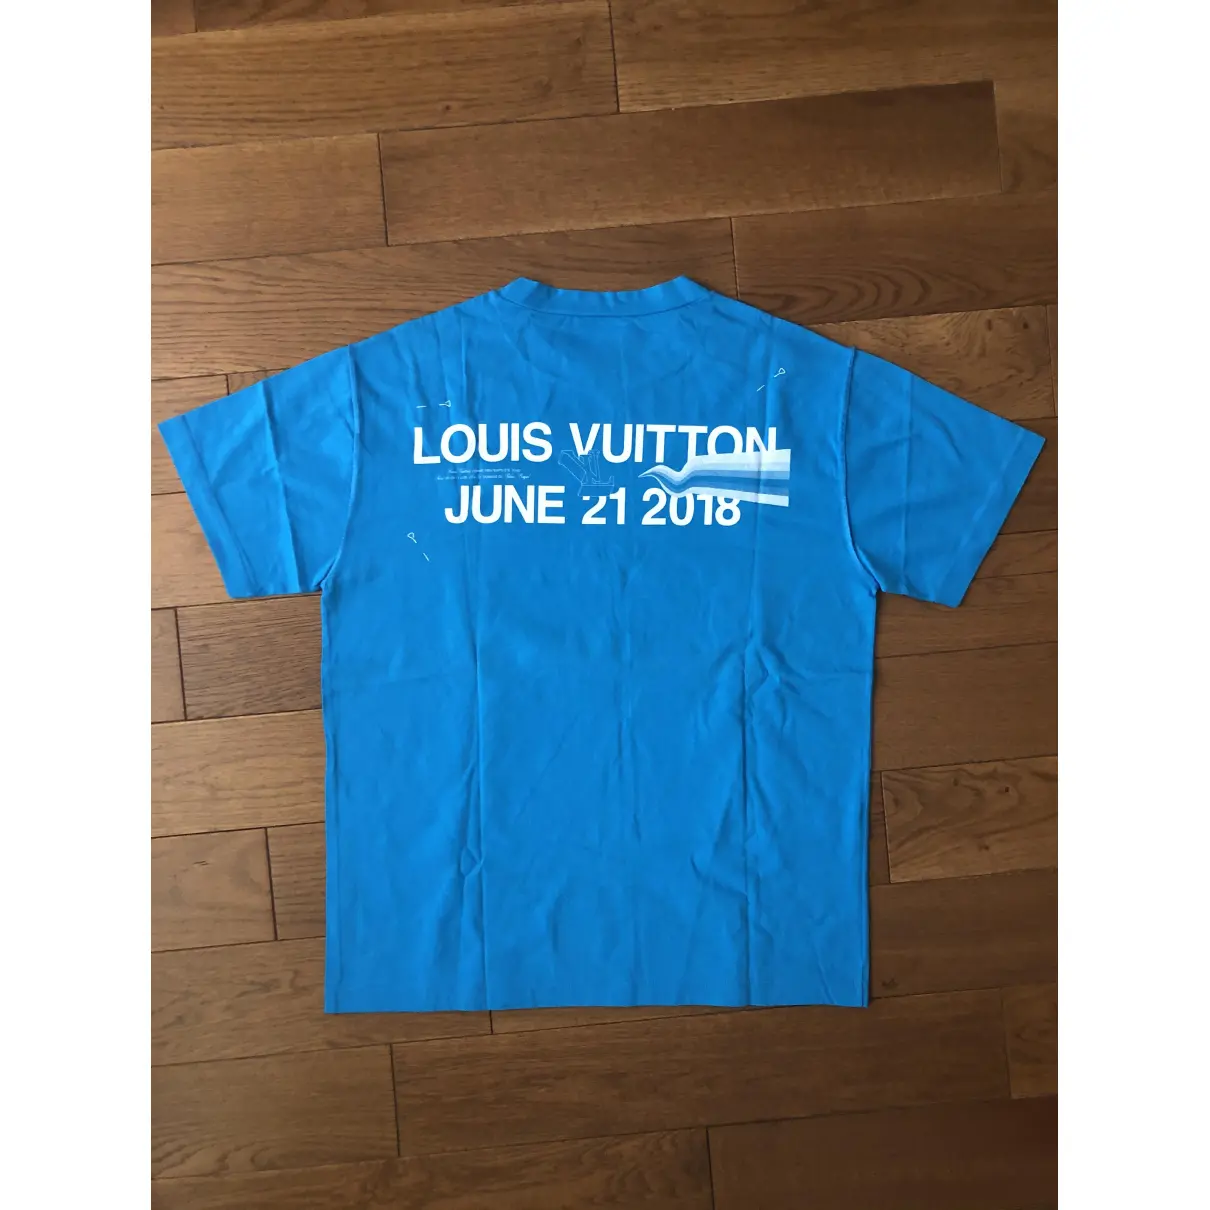 Buy Louis Vuitton T-shirt online